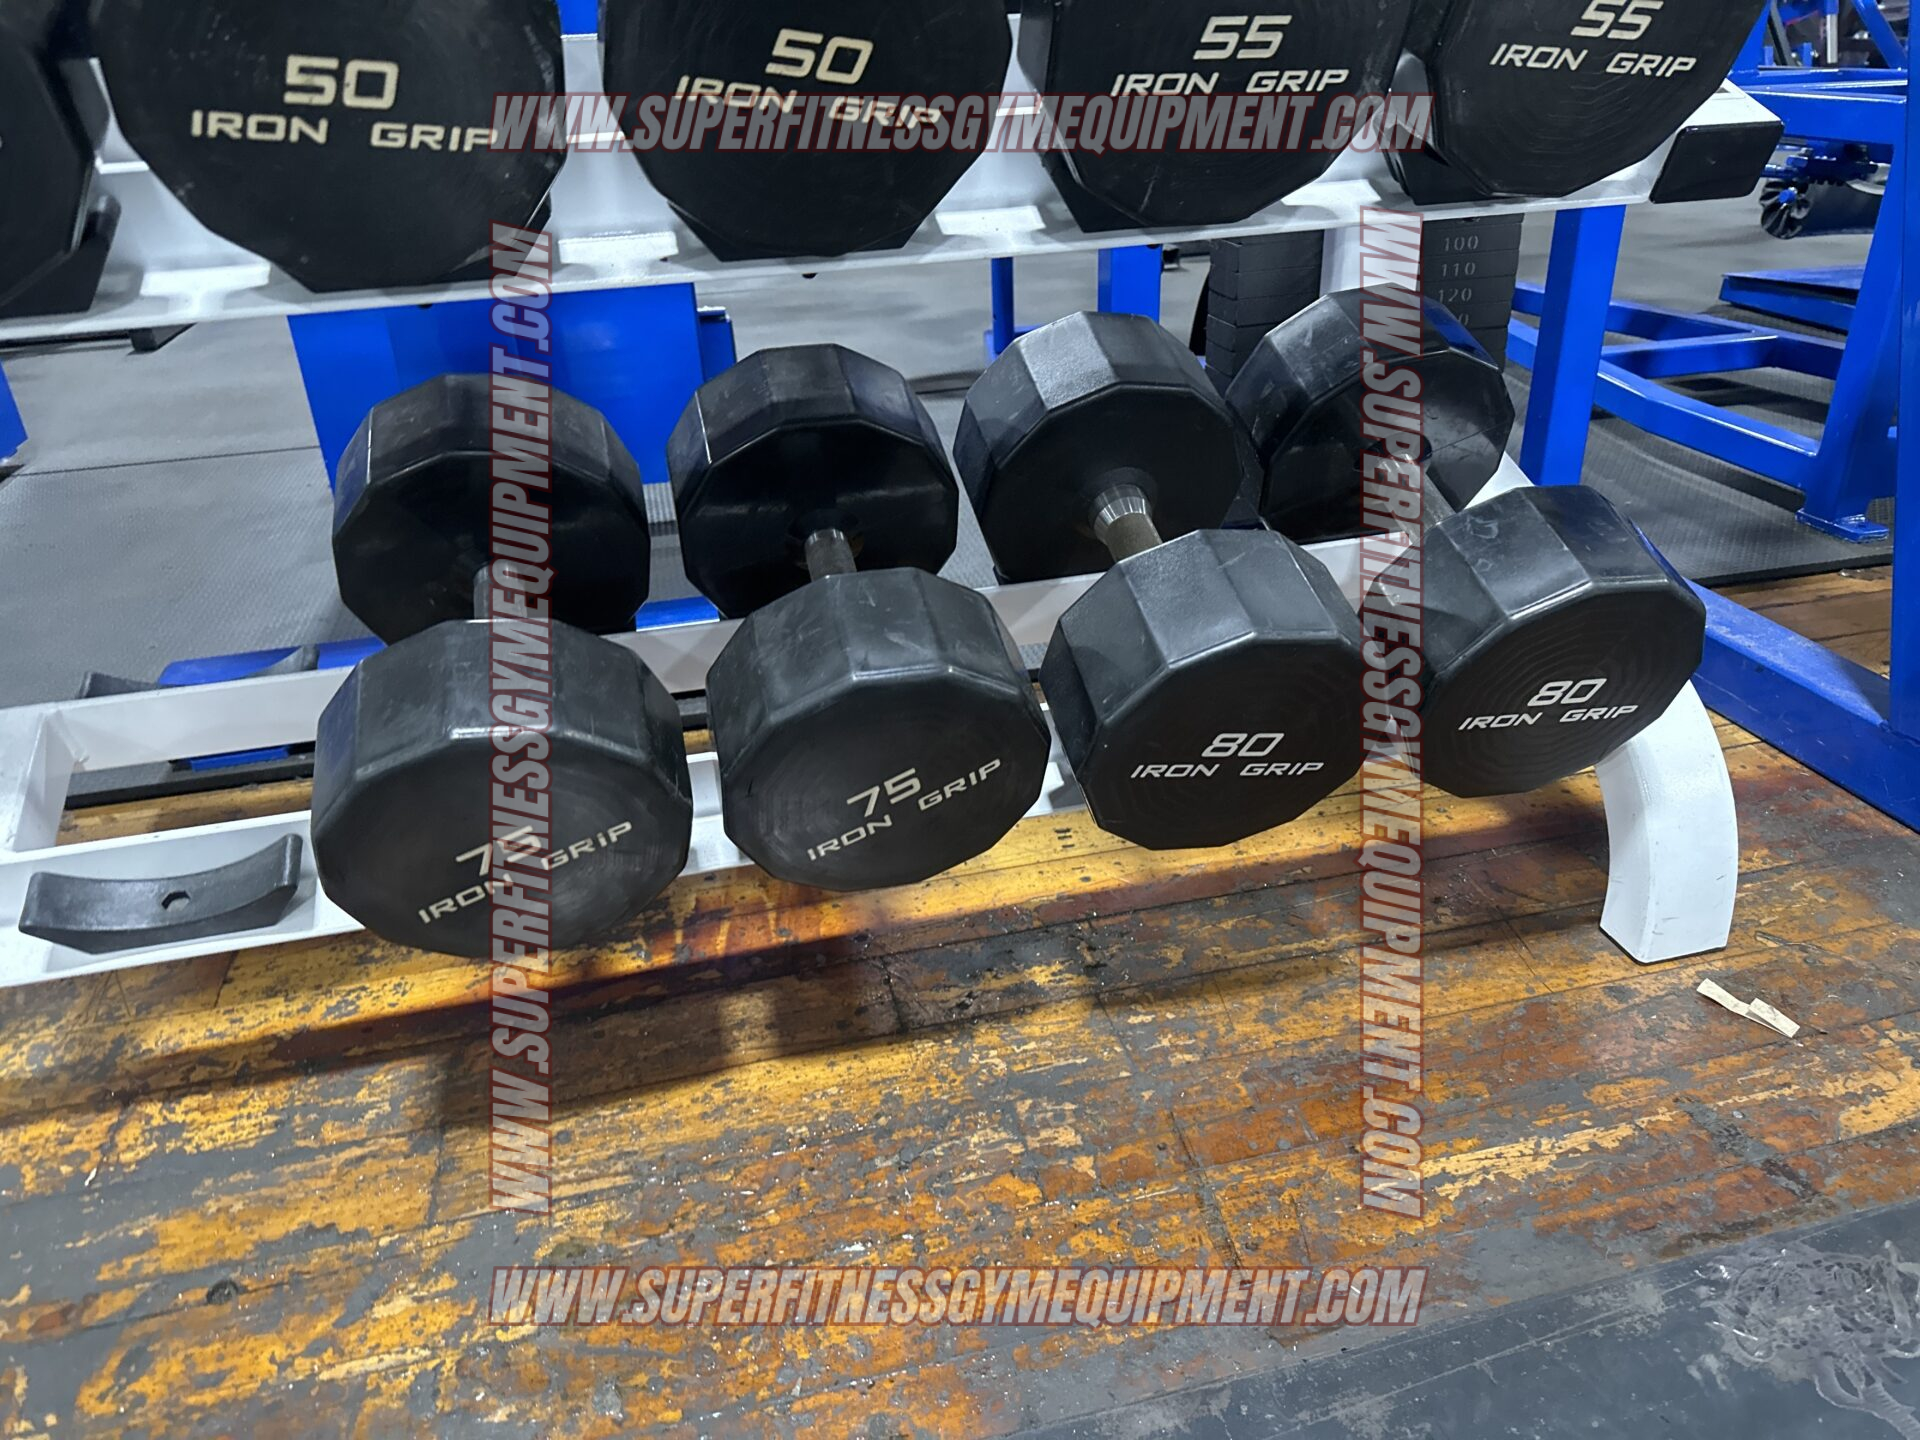 10-80 Iron Grip Dumbbells - Superfitness Gym Equipment